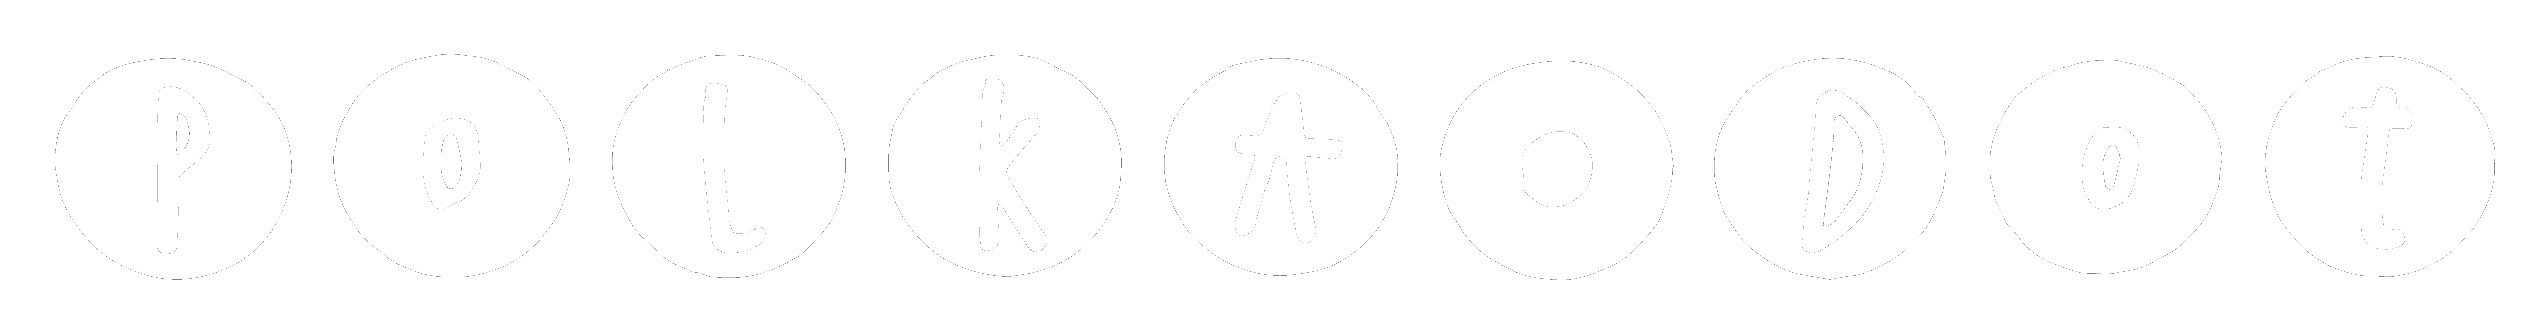 Polka Dot logo top - Homepage